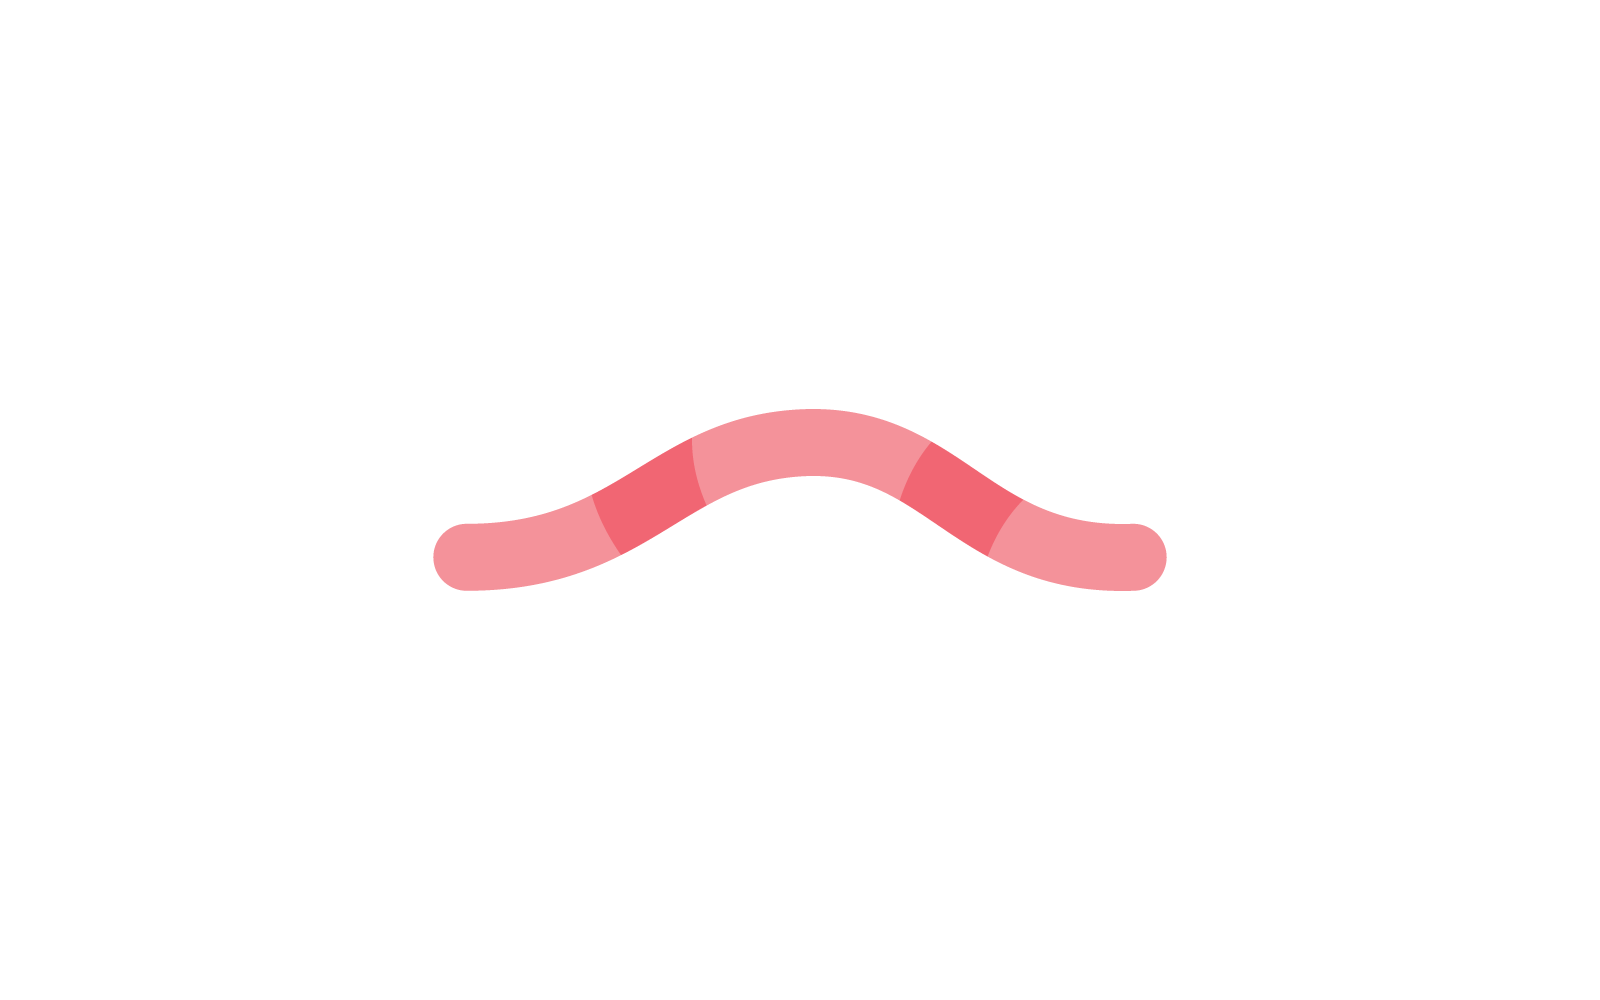 Worm illustration logo vector design template